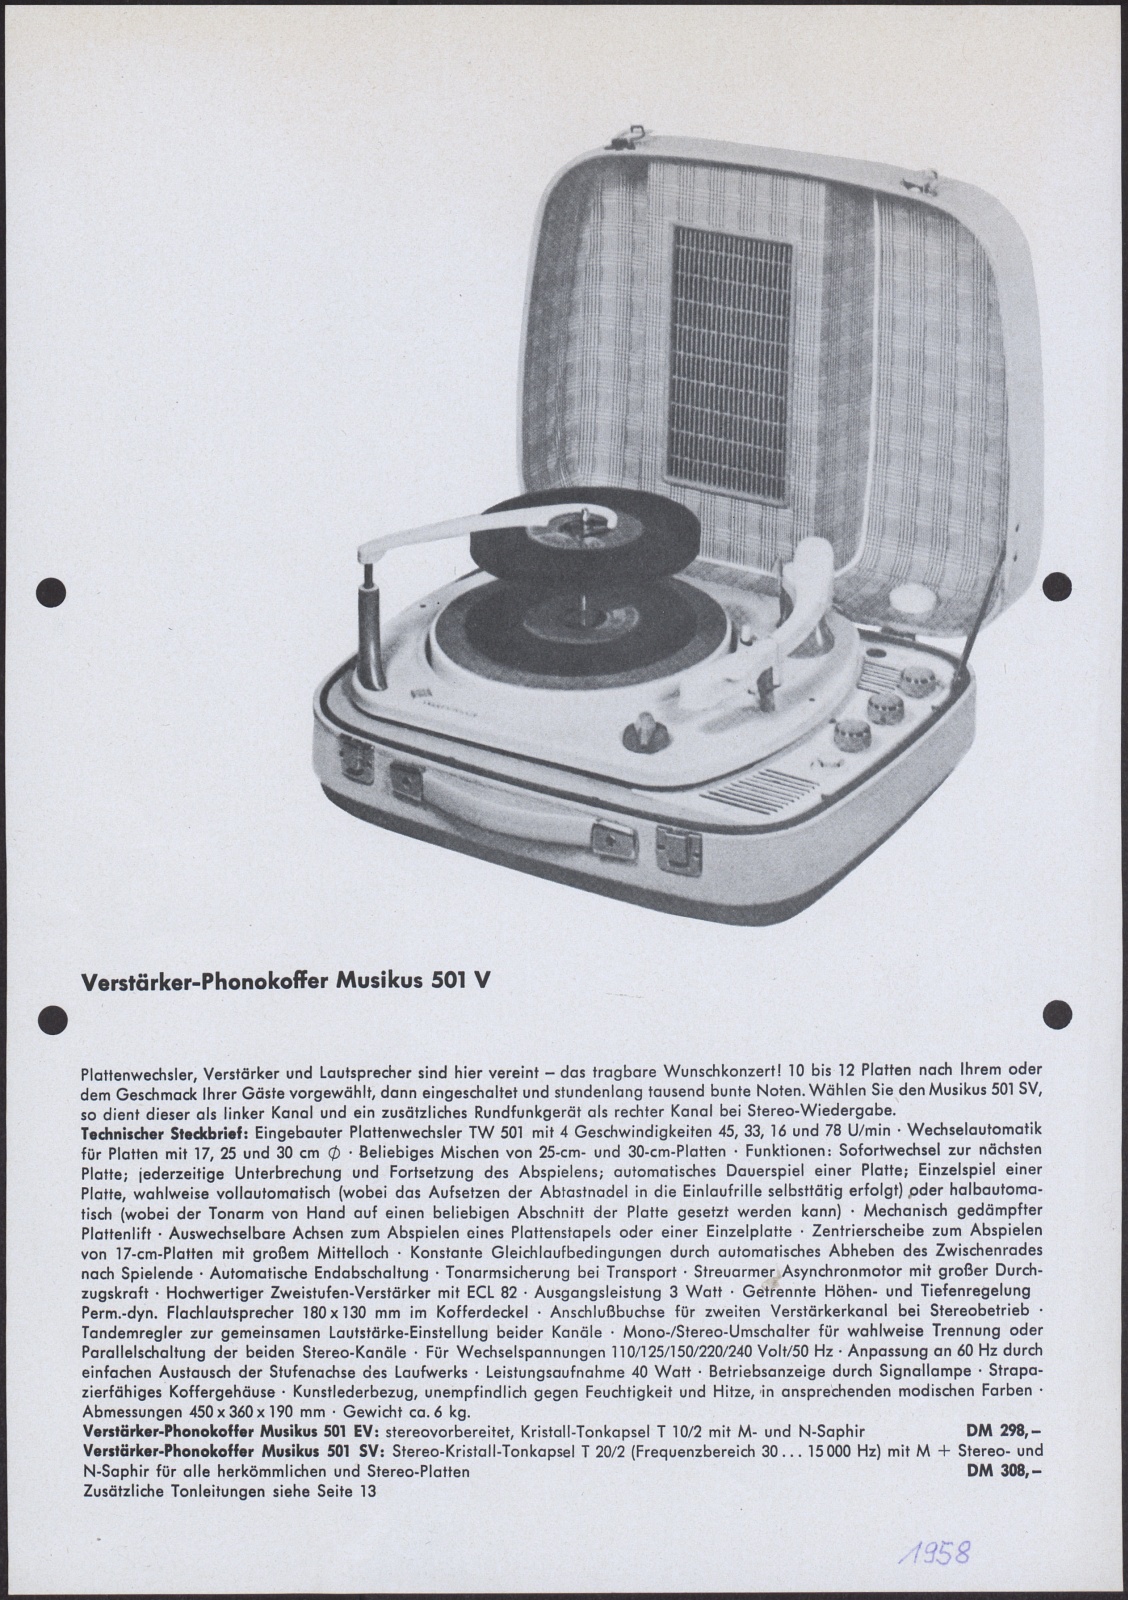 Werbeblatt: Telefunken Verstärker-Phonokoffer Musikus 501 V und Telefunken Verstärker-Phonokoffer Musikus 5 V (Stiftung Deutsches Technikmuseum Berlin CC0)